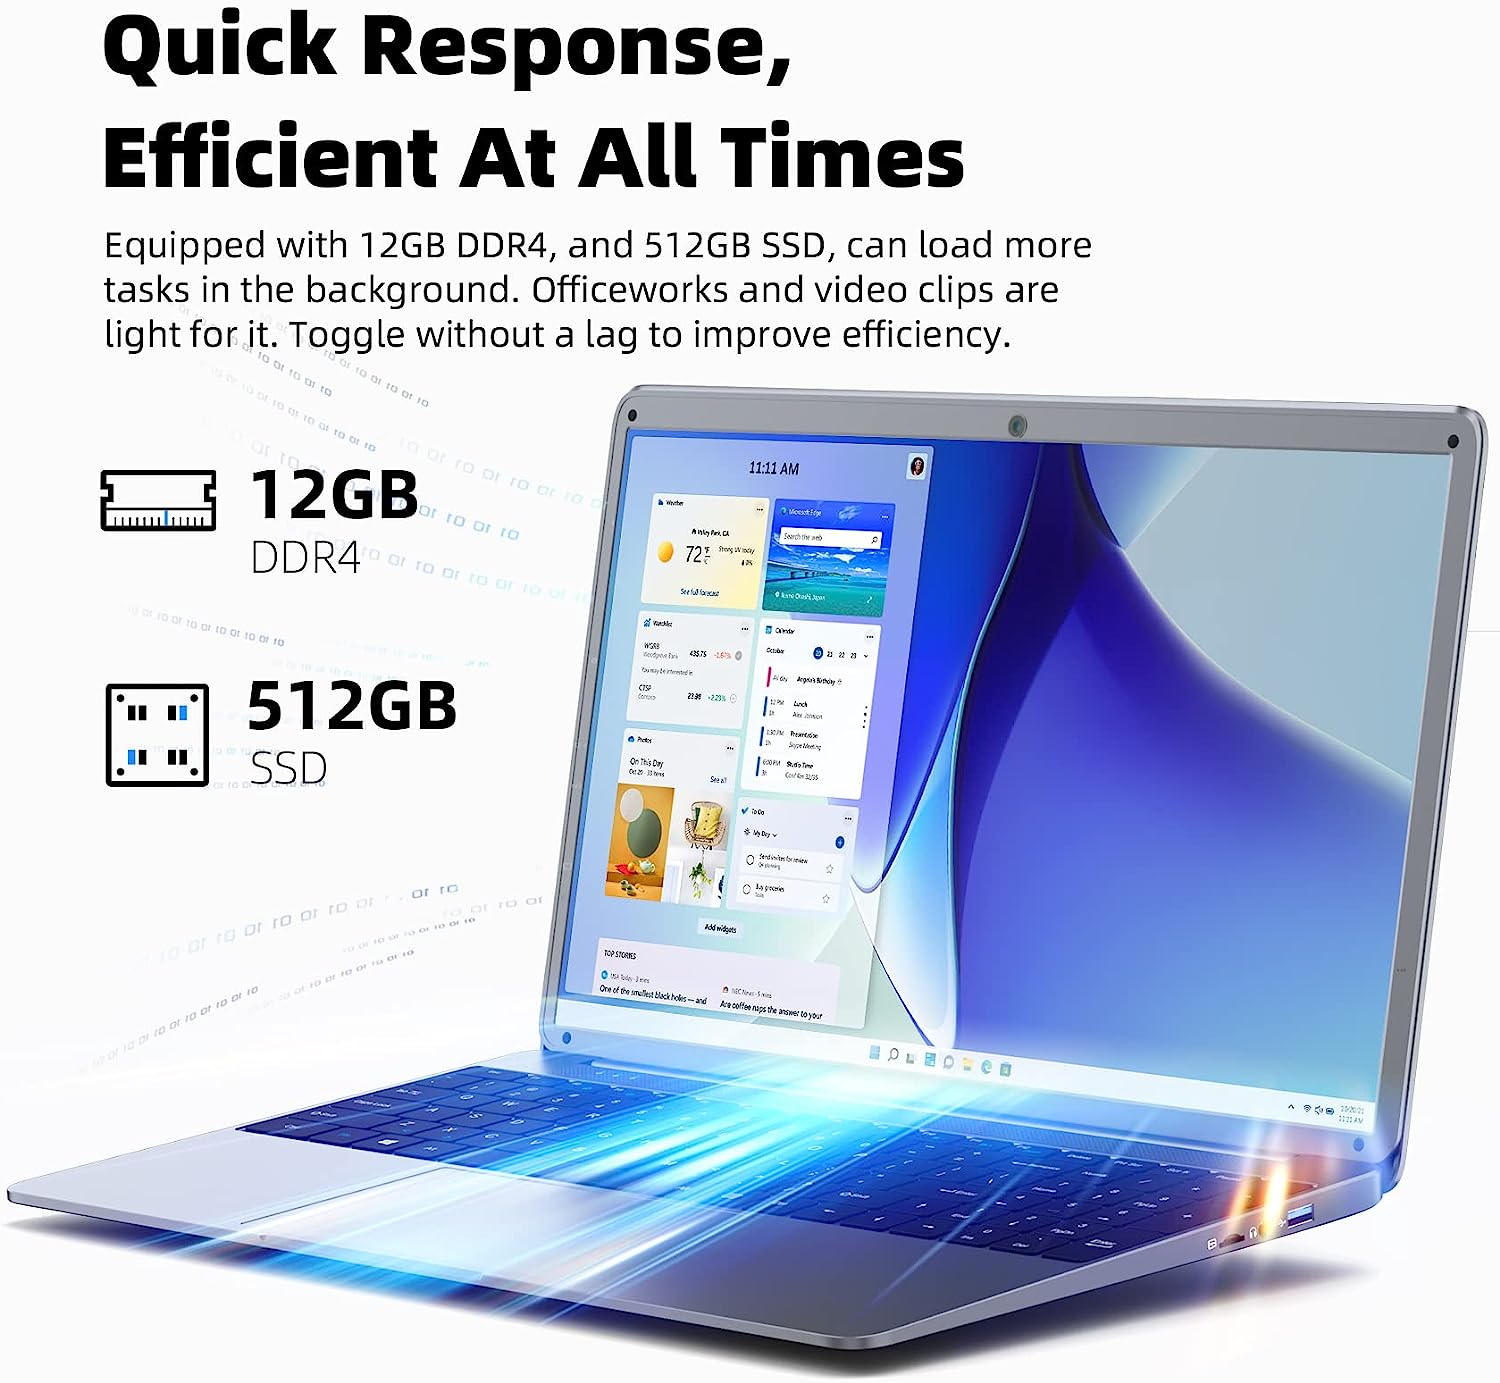 SGIN Laptop 4GB DDR4 128GB SSD, 15.6 Inch Windows 11 Laptops Computer with Intel Celeron Quad Core Processor (up to 2.5 GHz), Intel UHD Graphics 600, Mini HDMI, WiFi, Webcam, USB3.0, Bluetooth 4.2